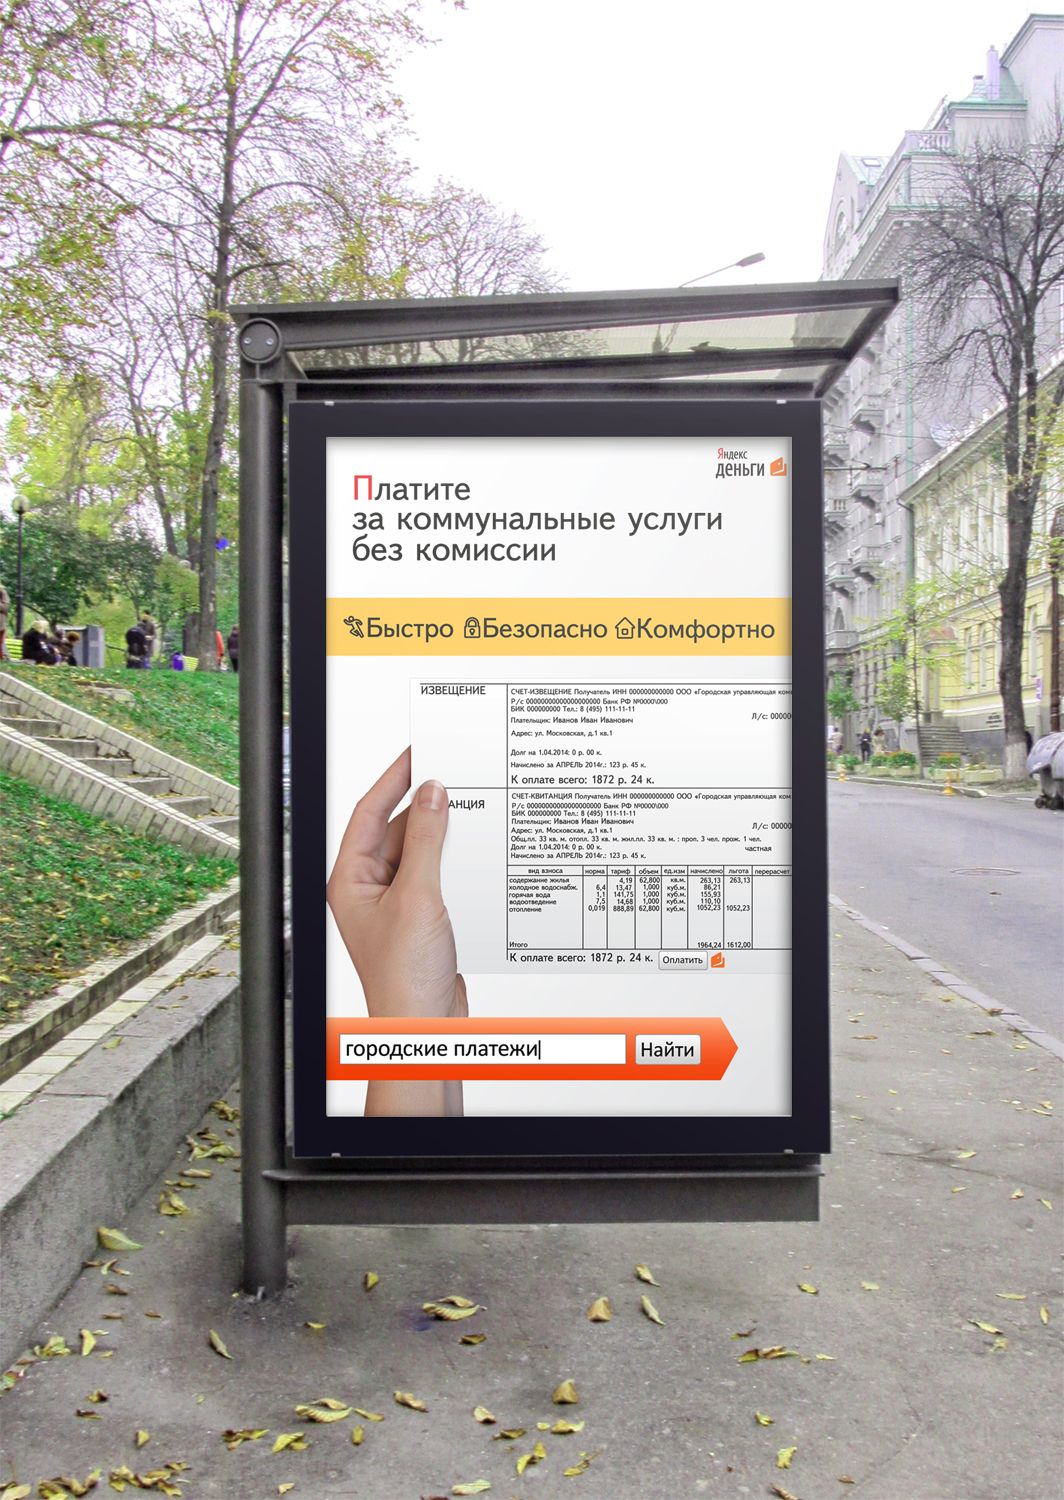 Реклама Яндекс.Денег для оплаты ЖКХ - дизайнер drawmedead